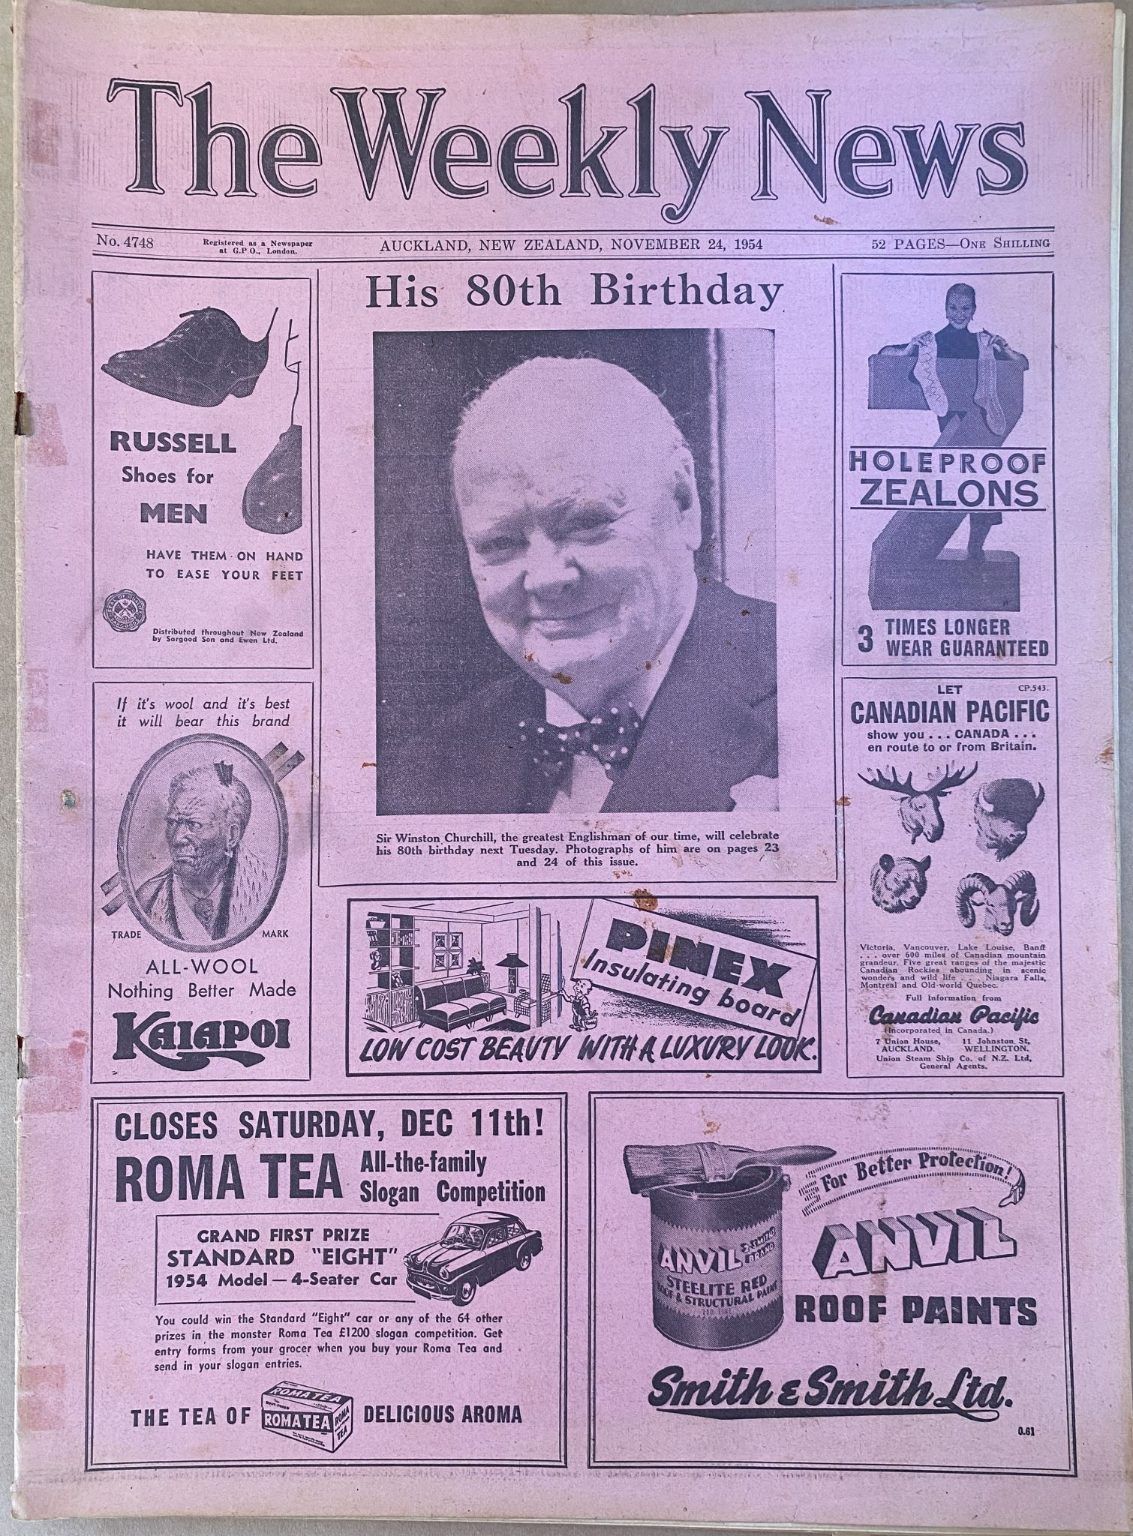 OLD NEWSPAPER: The Weekly News - No. 4748, 24 November 1954